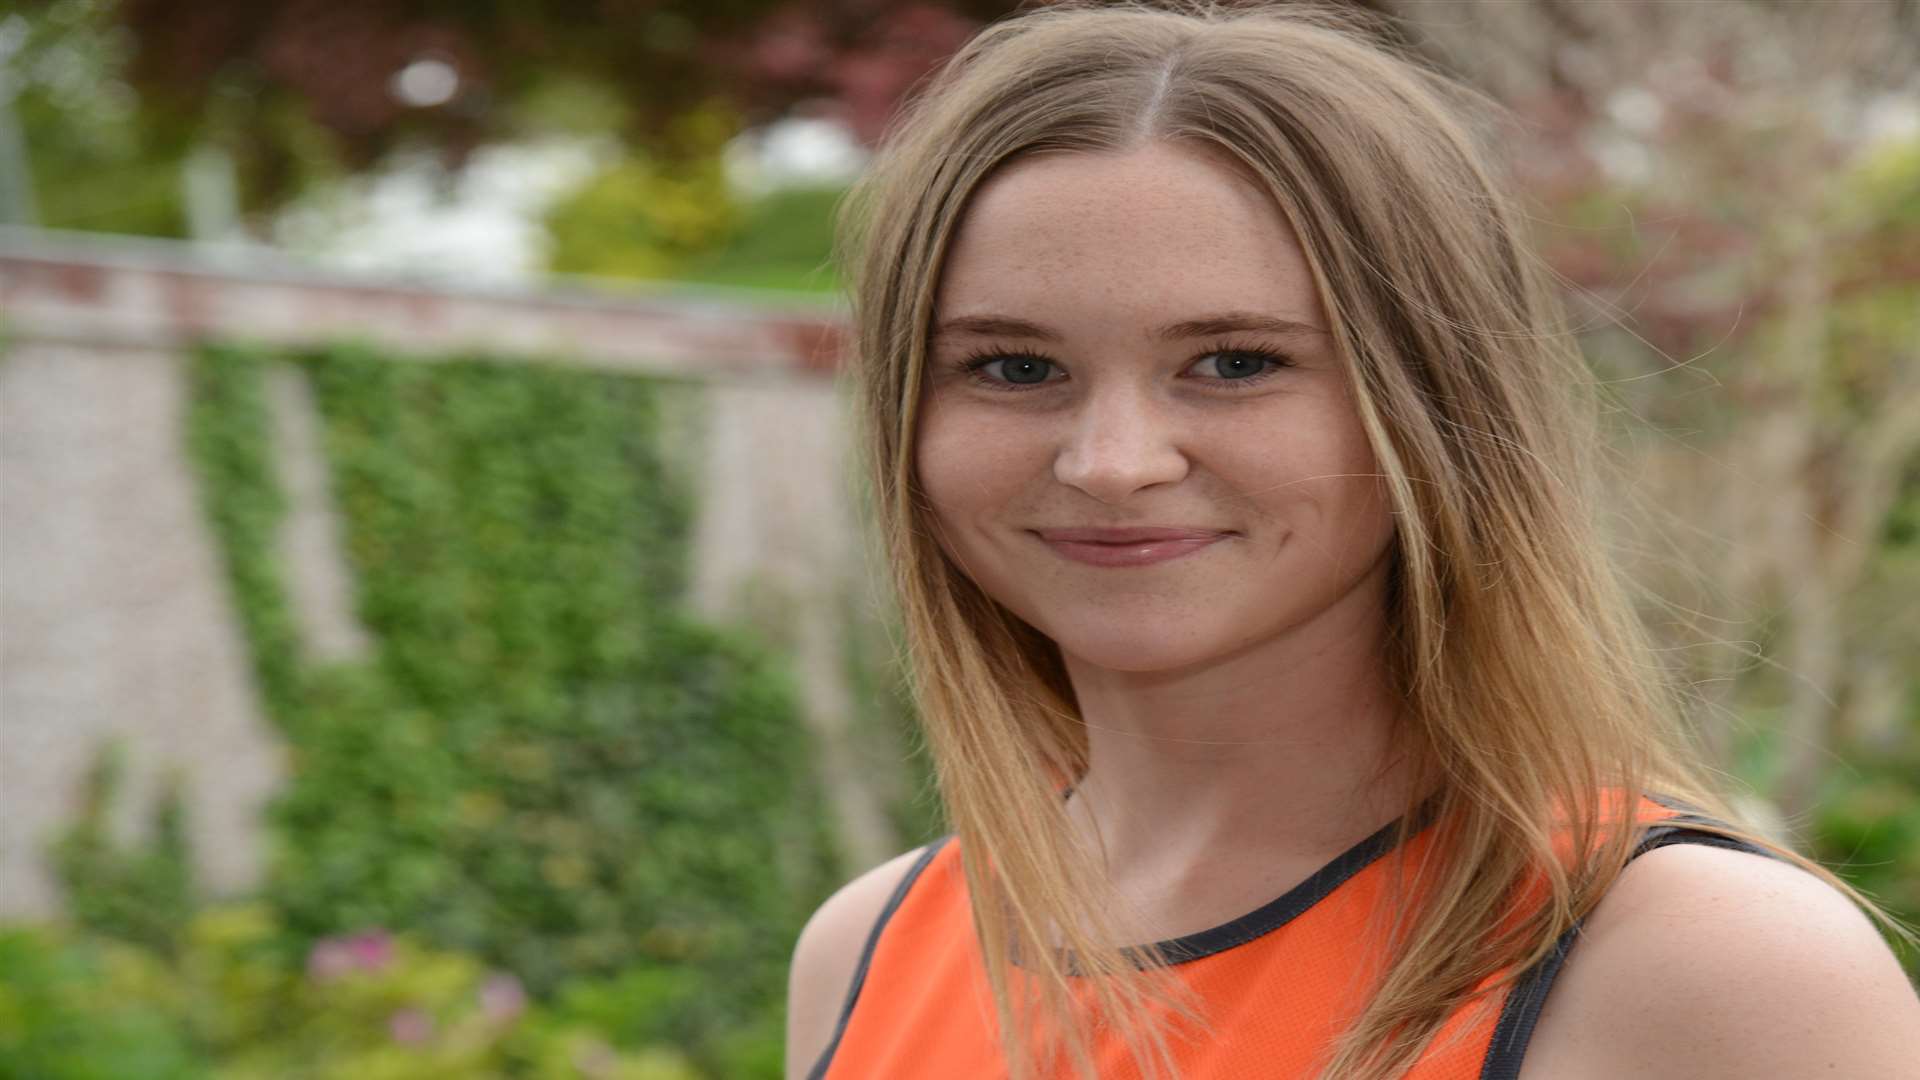 Liz Kallend, 21 who is running the London Marathon for Arthritis Research UK